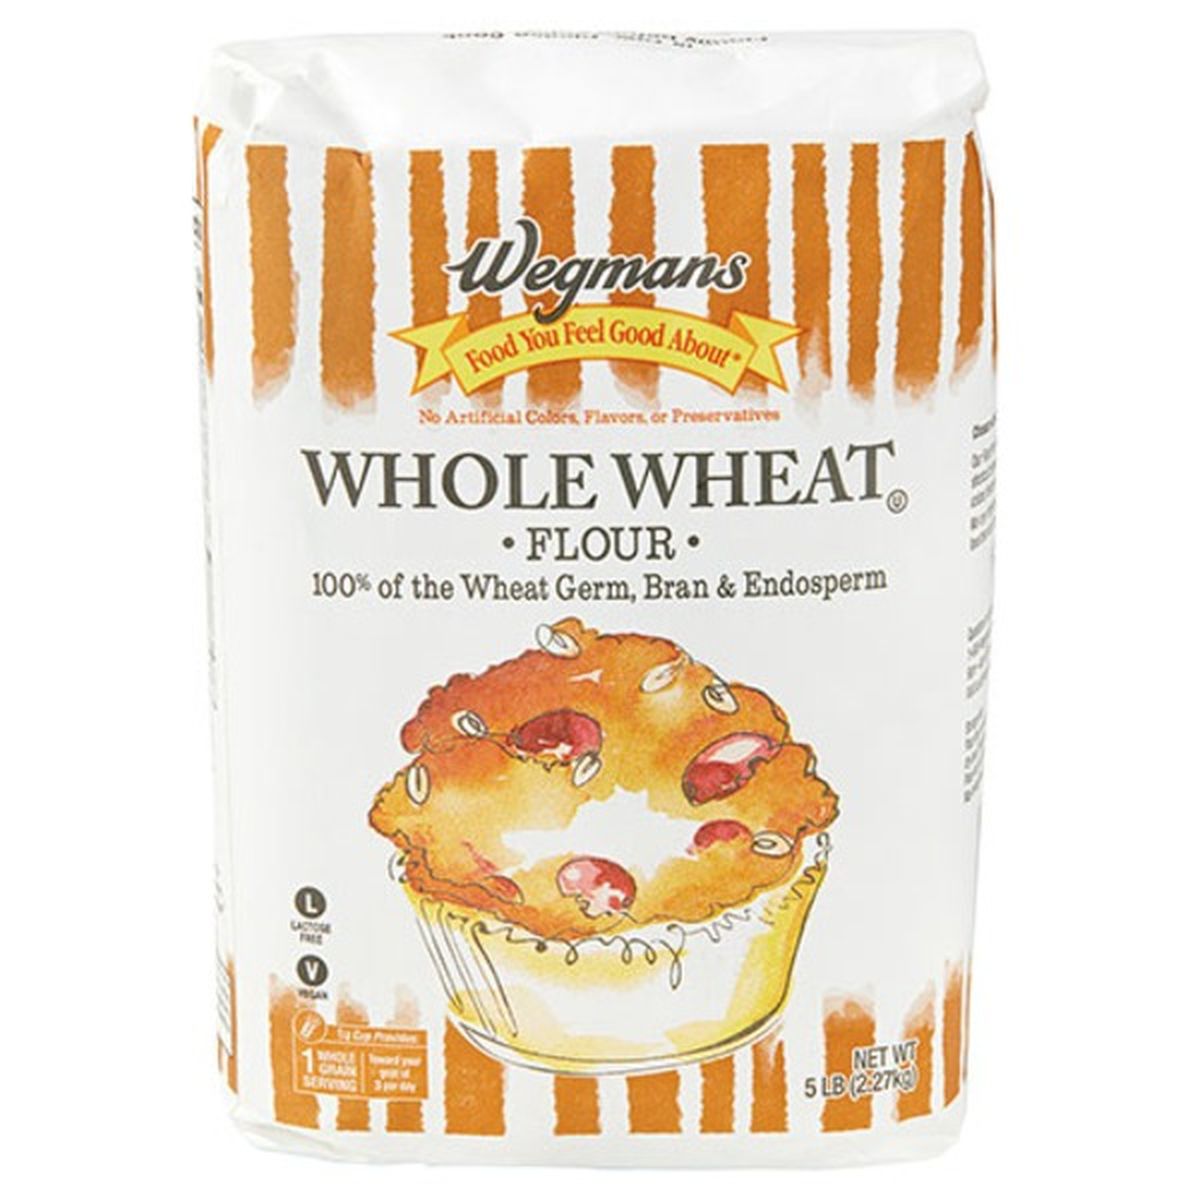 Calories in Wegmans Whole Wheat Flour